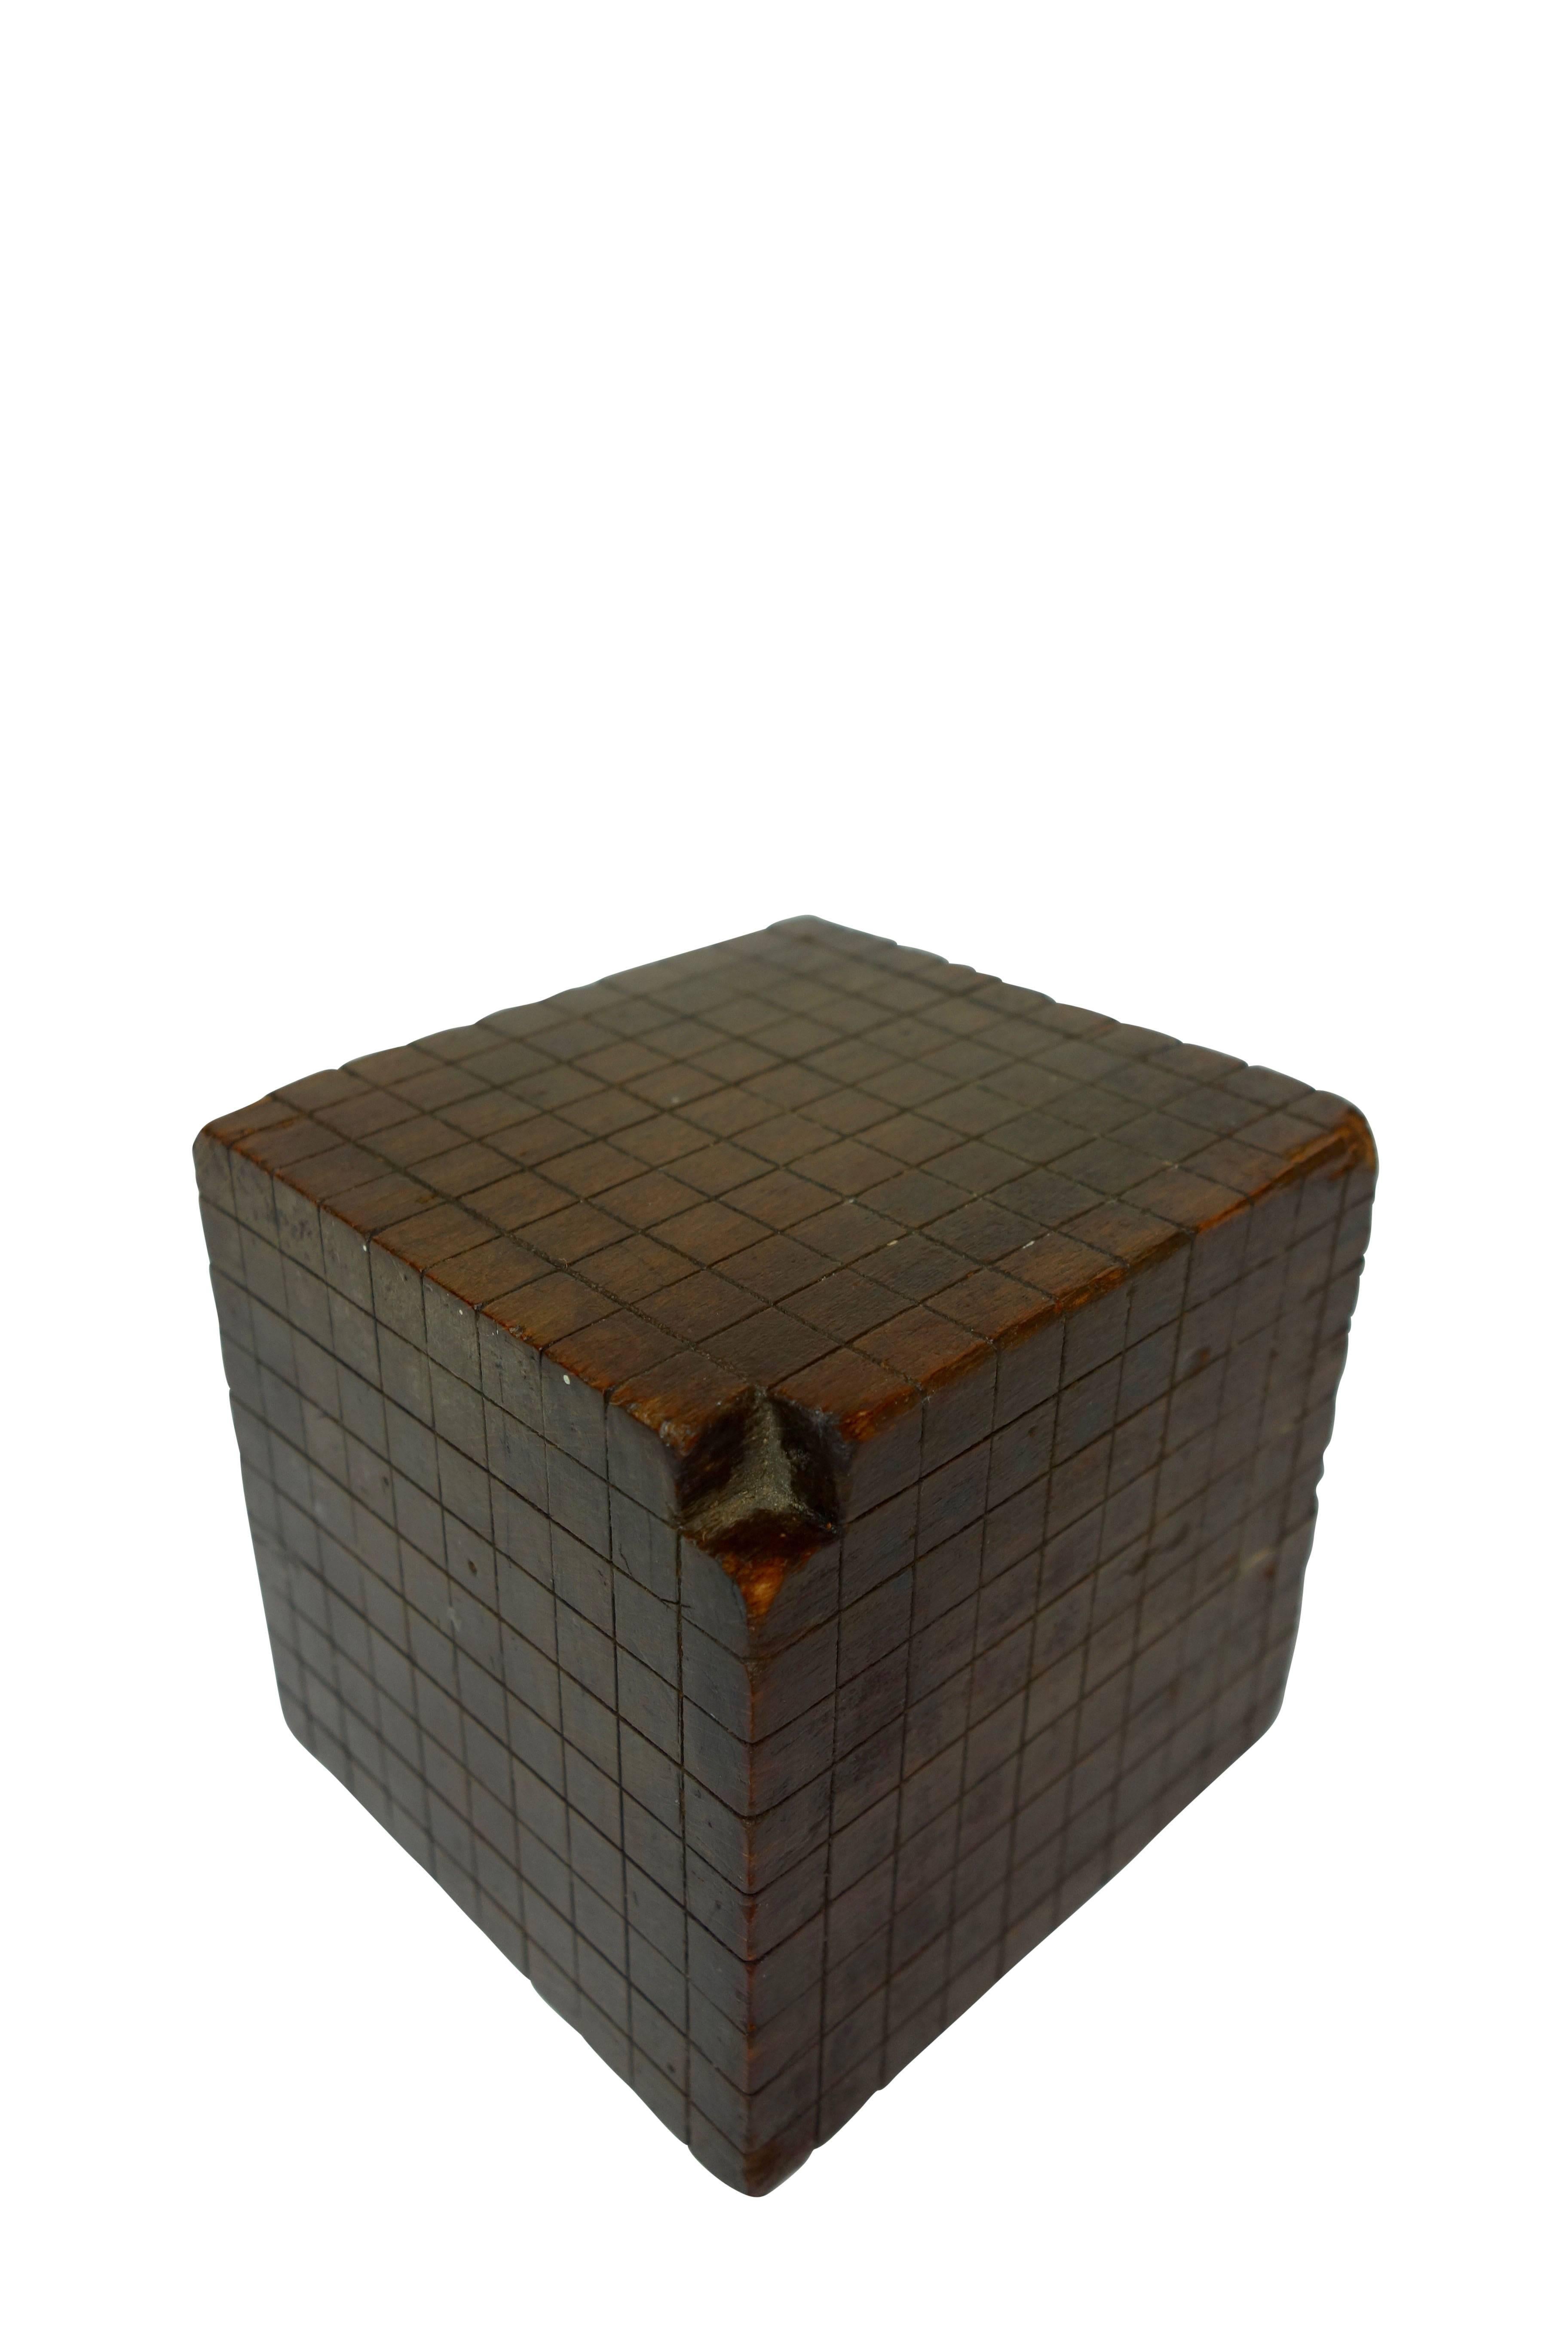 Wood “Base Ten” Cube Educational Model 2